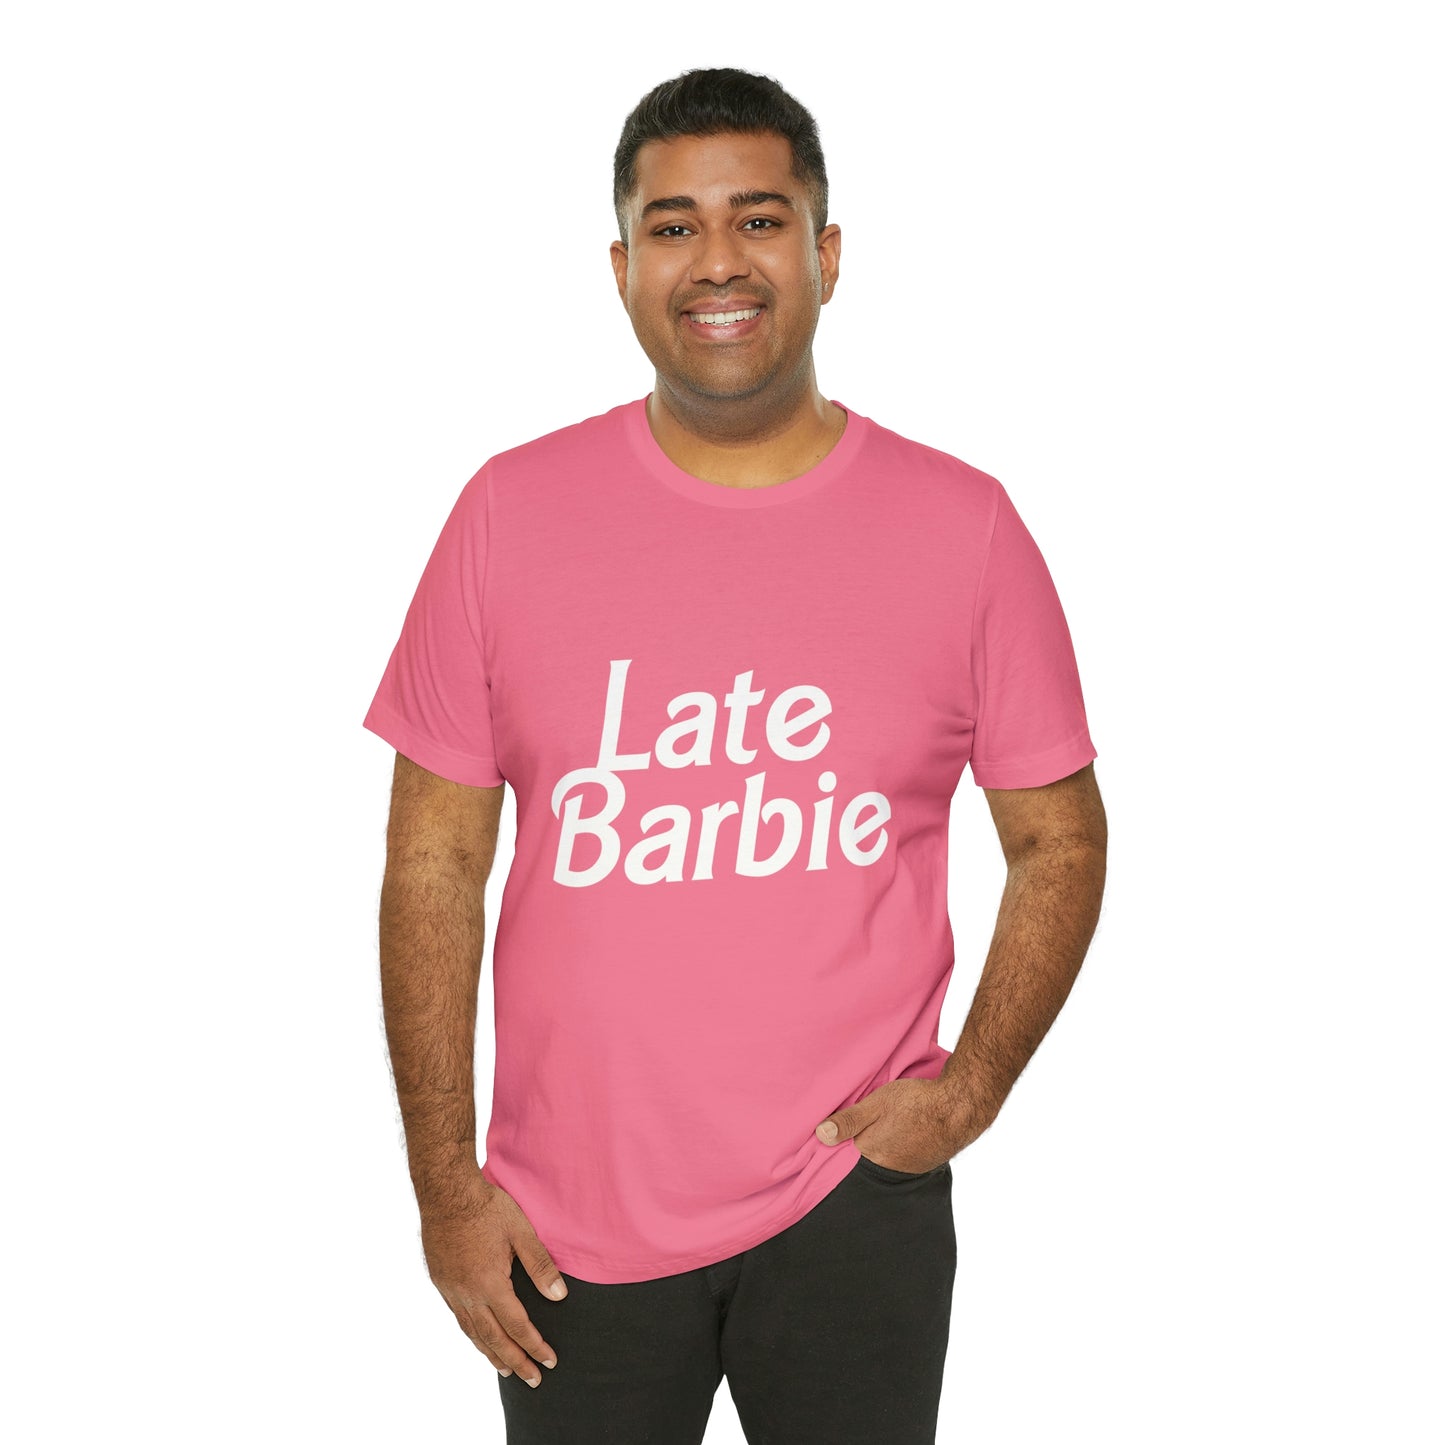 Late Barbie